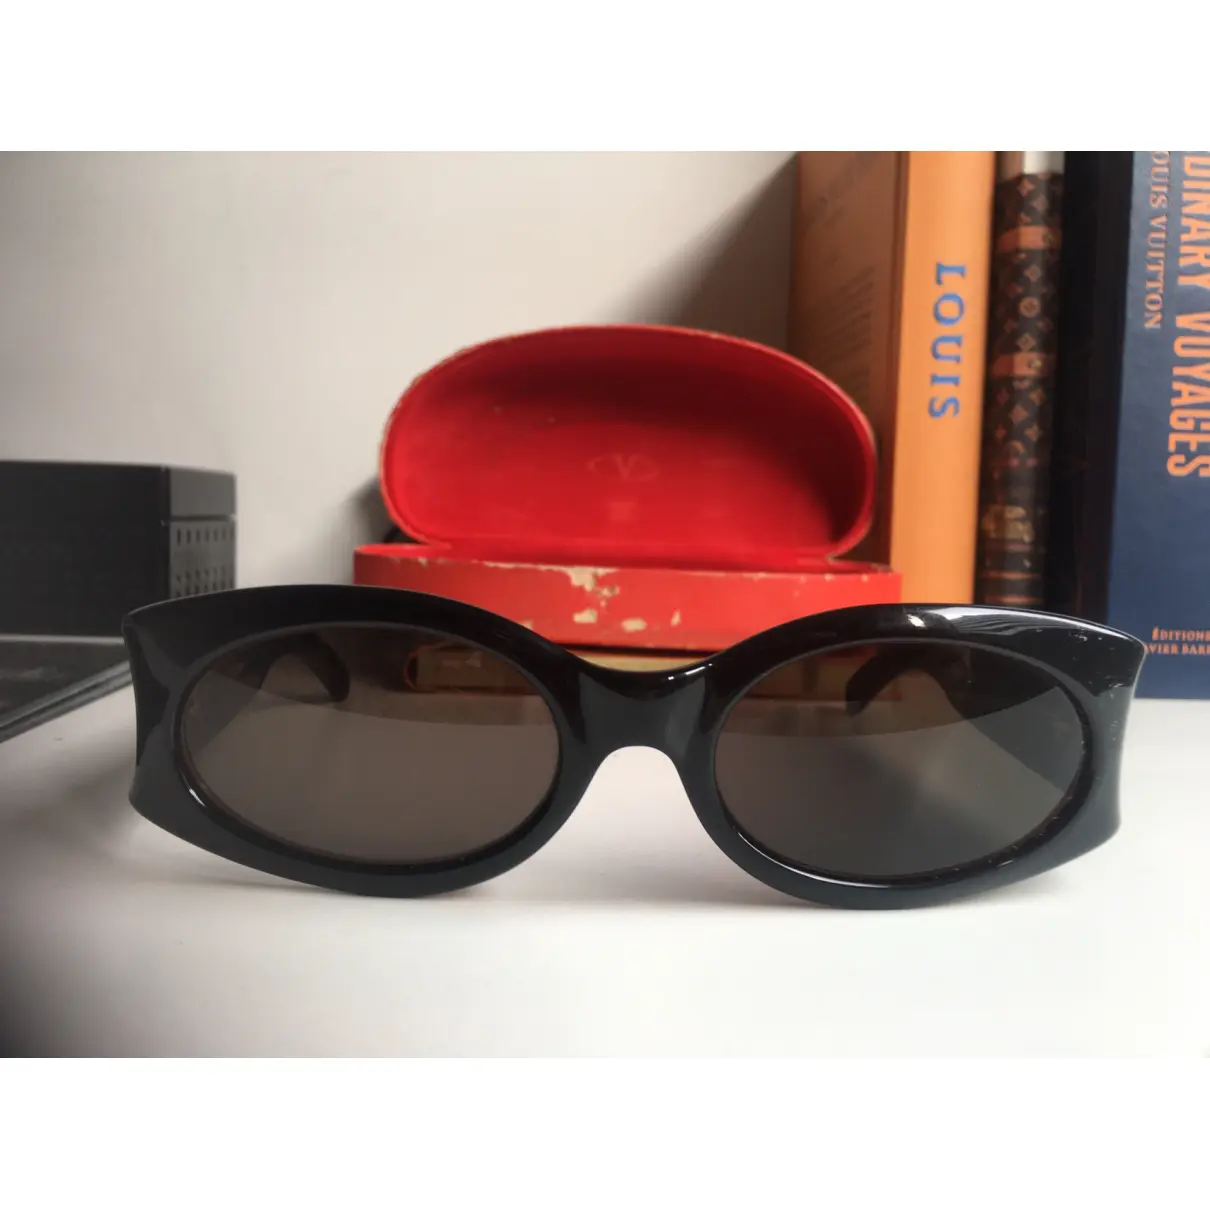 Buy Valentino Garavani Sunglasses online